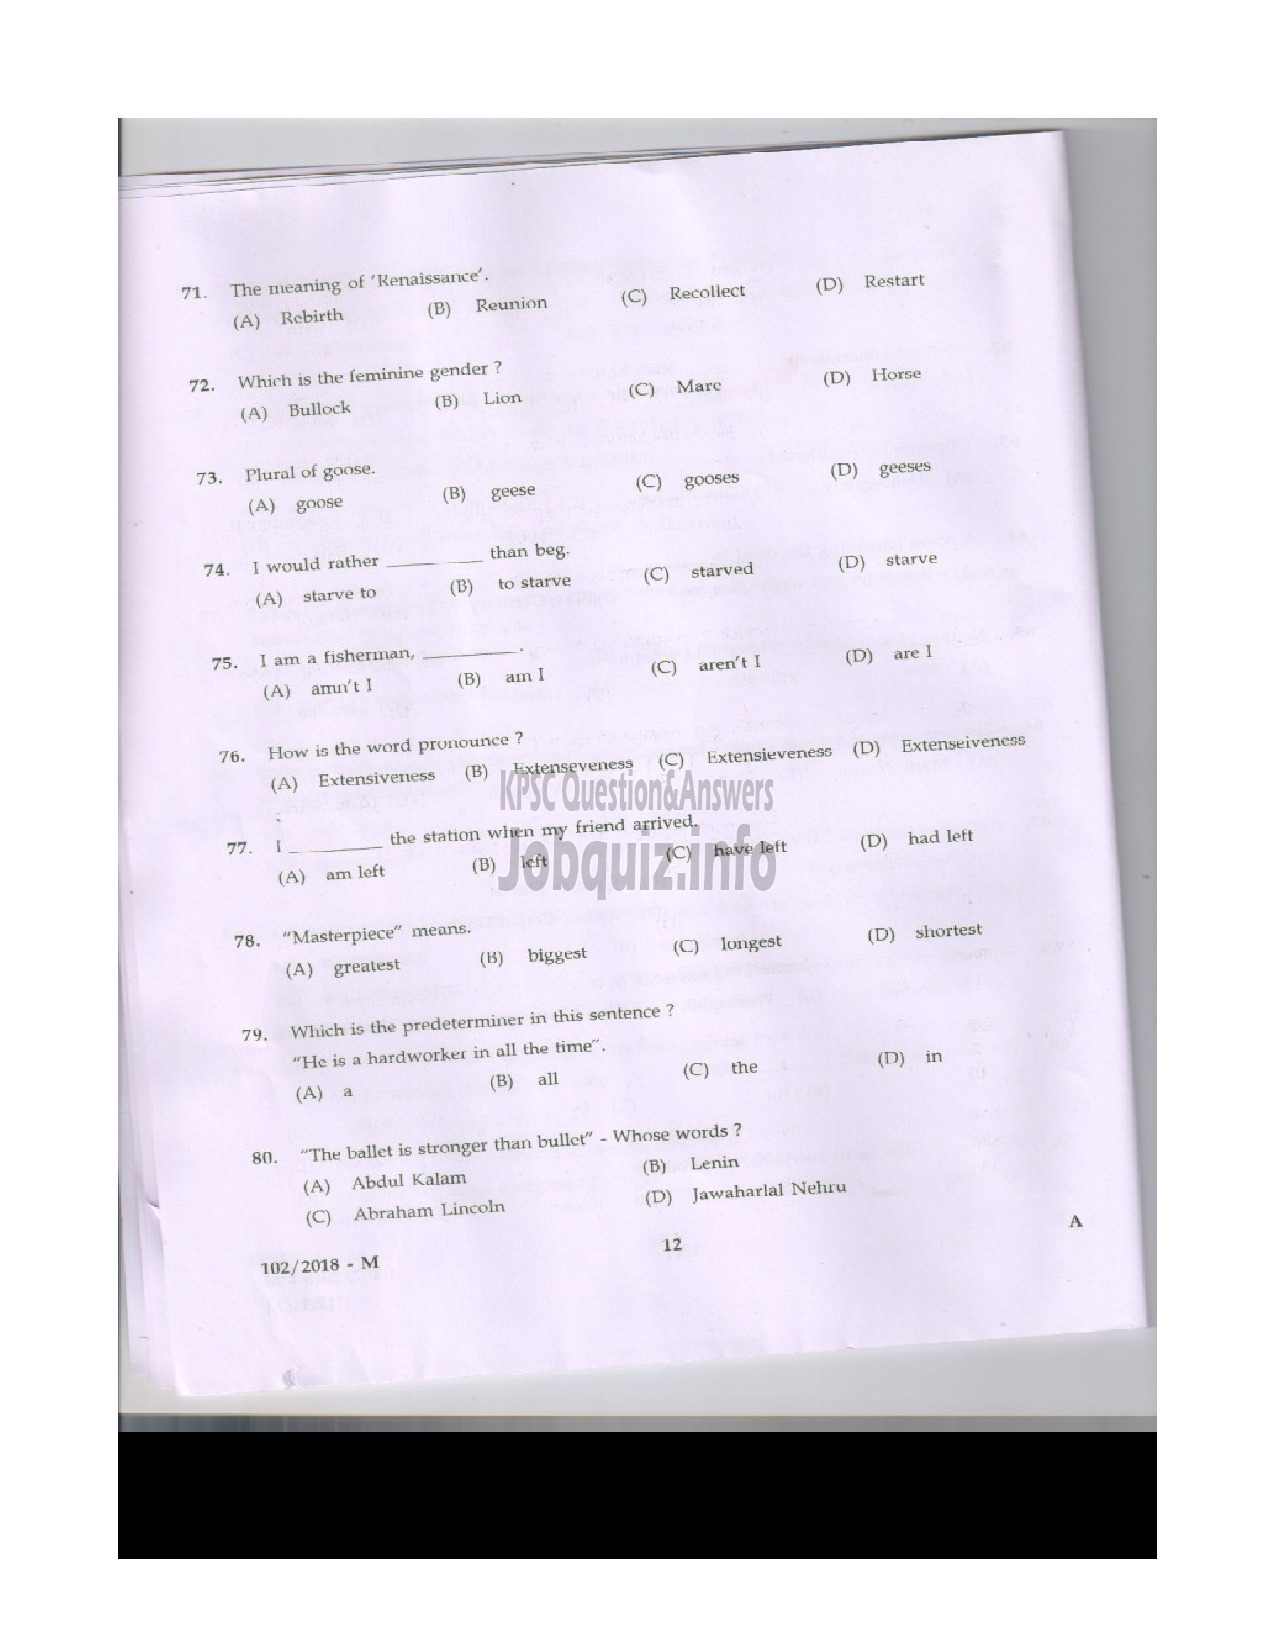 Kerala PSC Question Paper - LAB ASSISTANT HIGHER SECONDARY EDUCATION THRISSUR / WAYANAD / ALAPPUZHA / IDUKKI / MALAPPURAM DISTRICTS ENGLISH / MALAYALAM-11